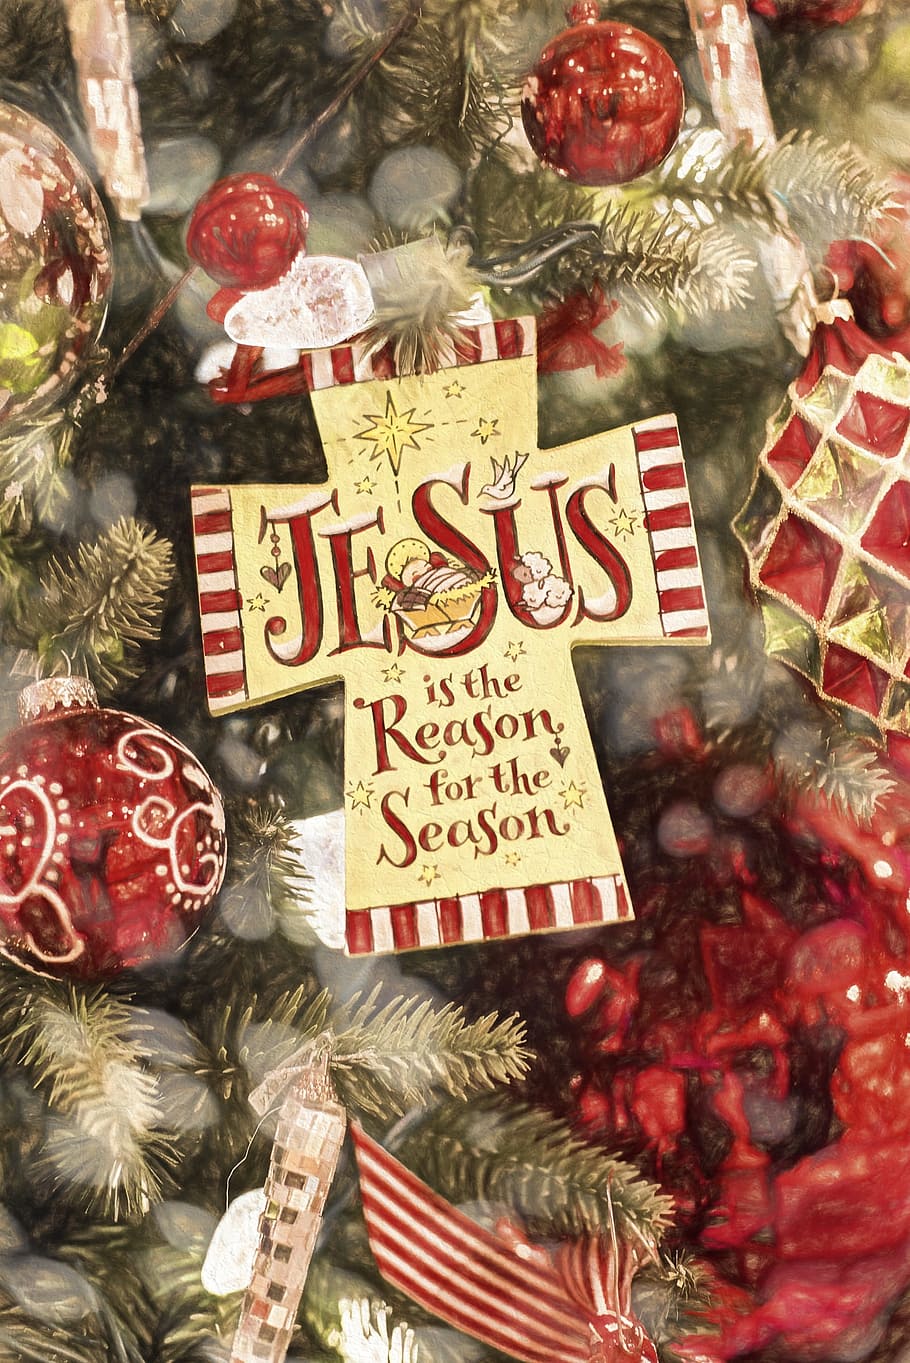 Christmas, Jesus, Ornament, Tree, Tree, Lights, ornament, tree, lights, religious, faith, holiday